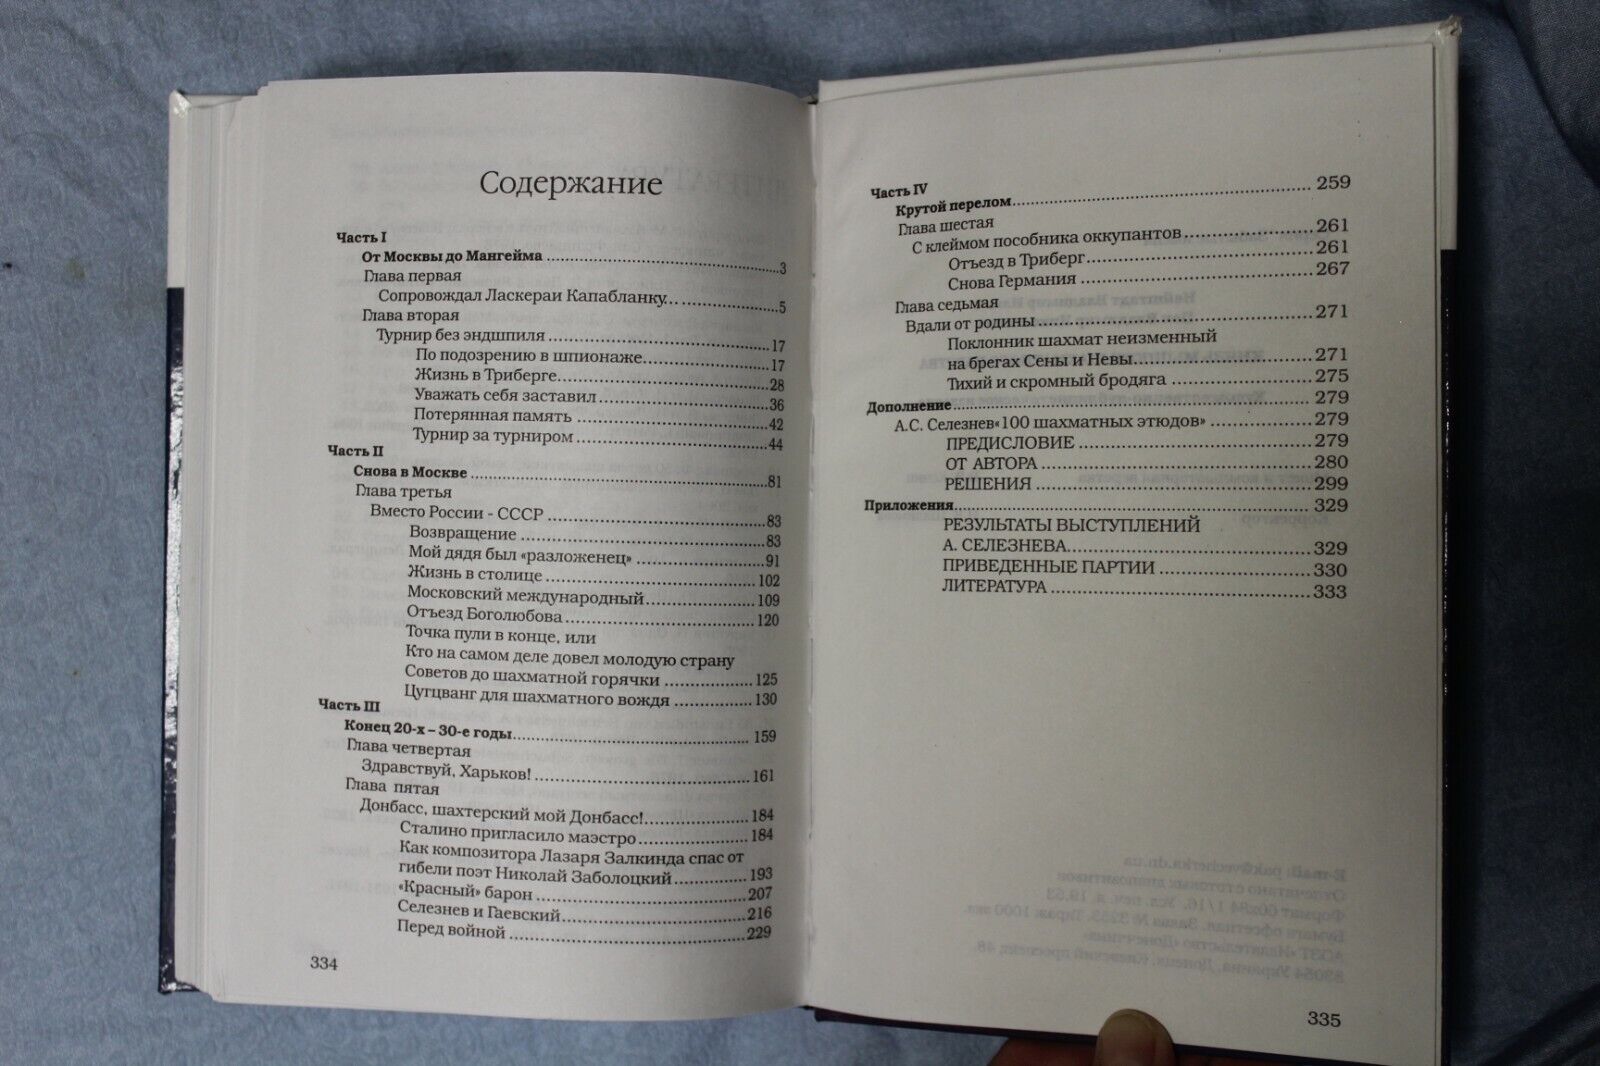 11537.Russian Chess Book: Prince Mushkin of the Chess Kingdom, 2007 Neischtadt